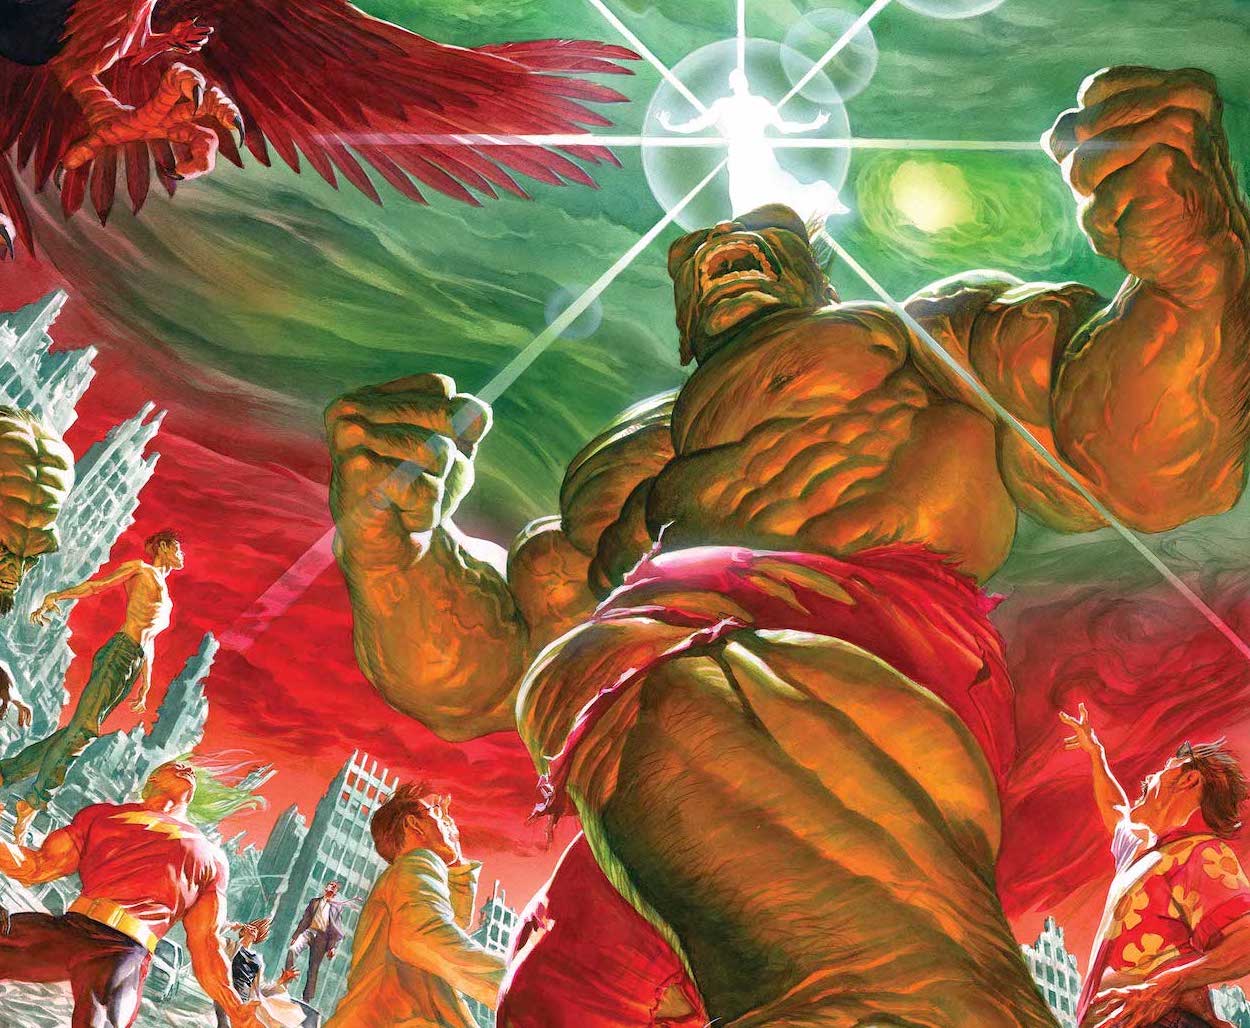 Marvel marks October 13th for 'Immortal Hulk' finale